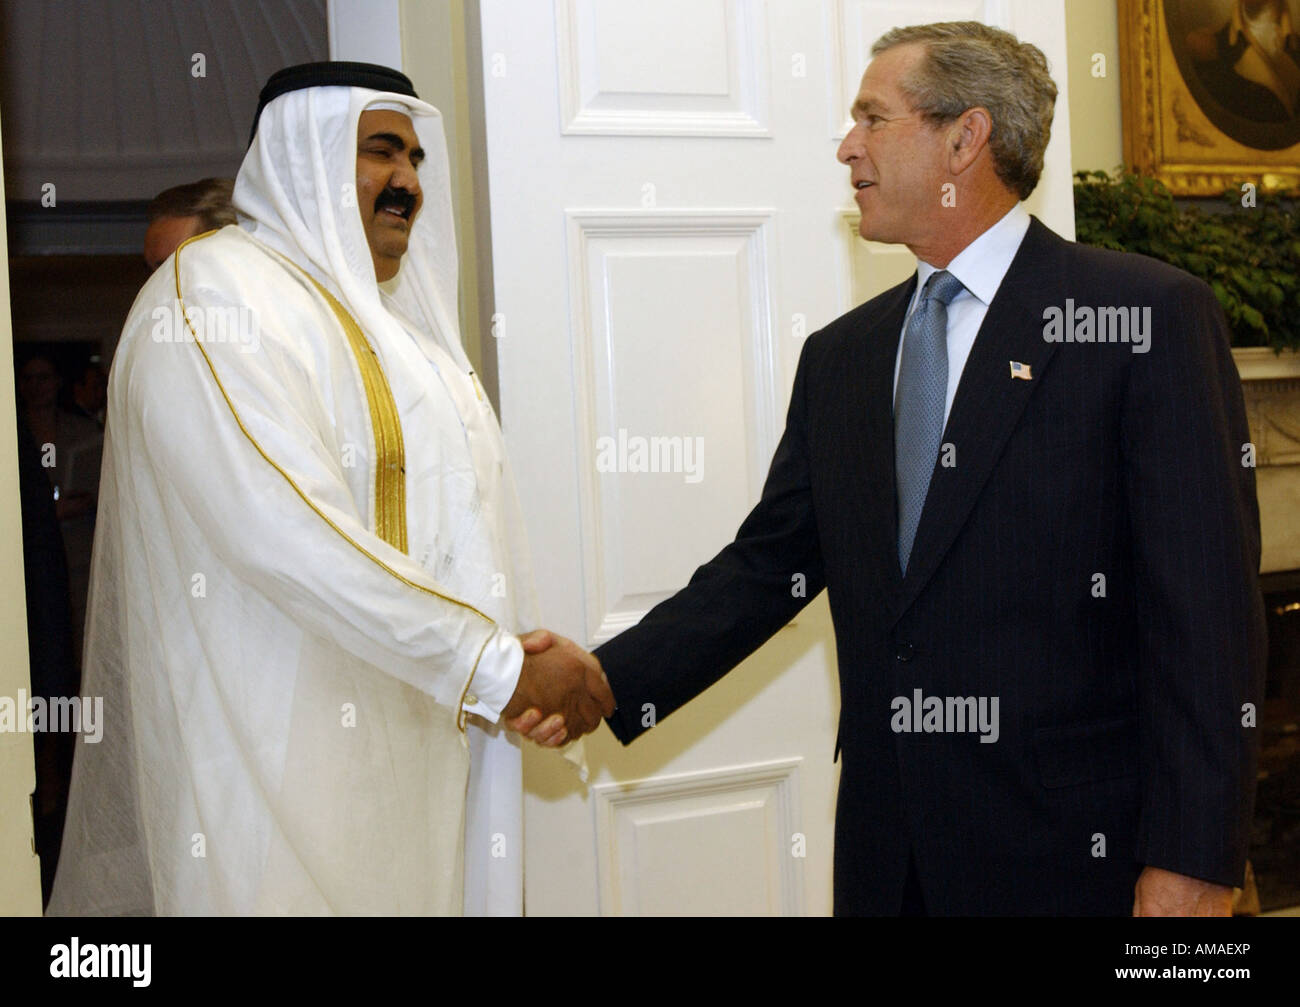 Sheikh Hamad Bin Khalifa Al Thani Emir of Qatar i meets with President Bush at the White House in Washington. Stock Photo